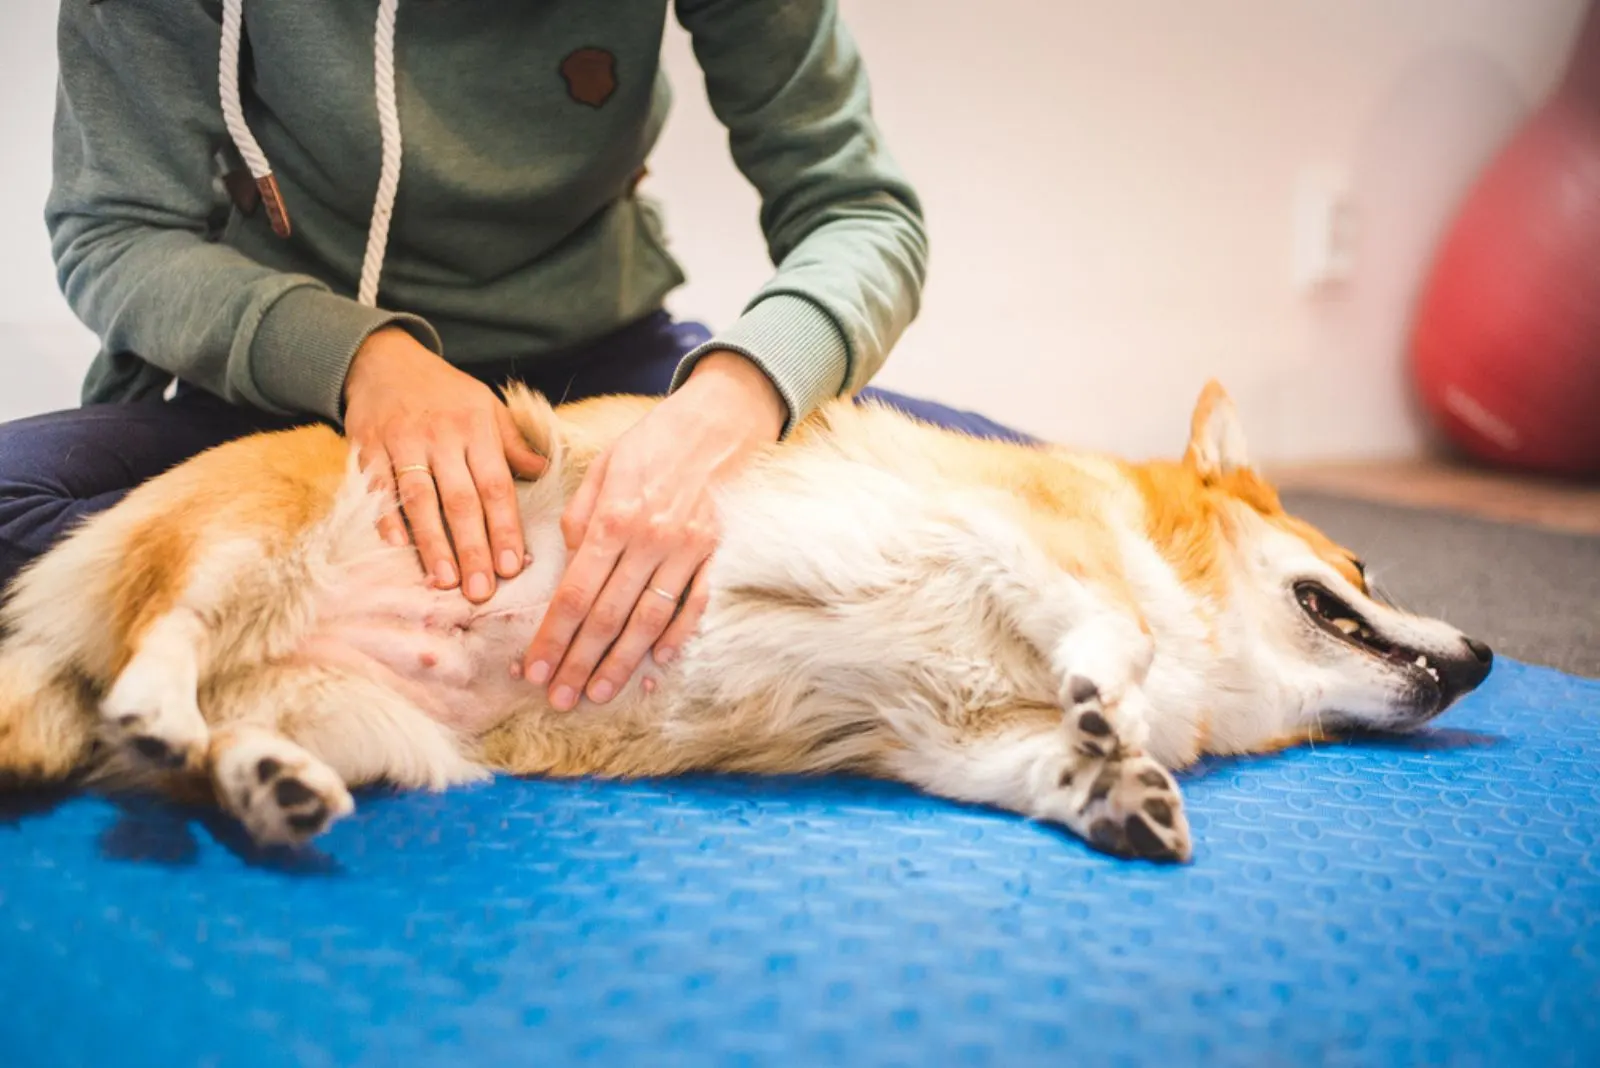  corgi pembroke dog during a Scar Tissue Massage therapy session